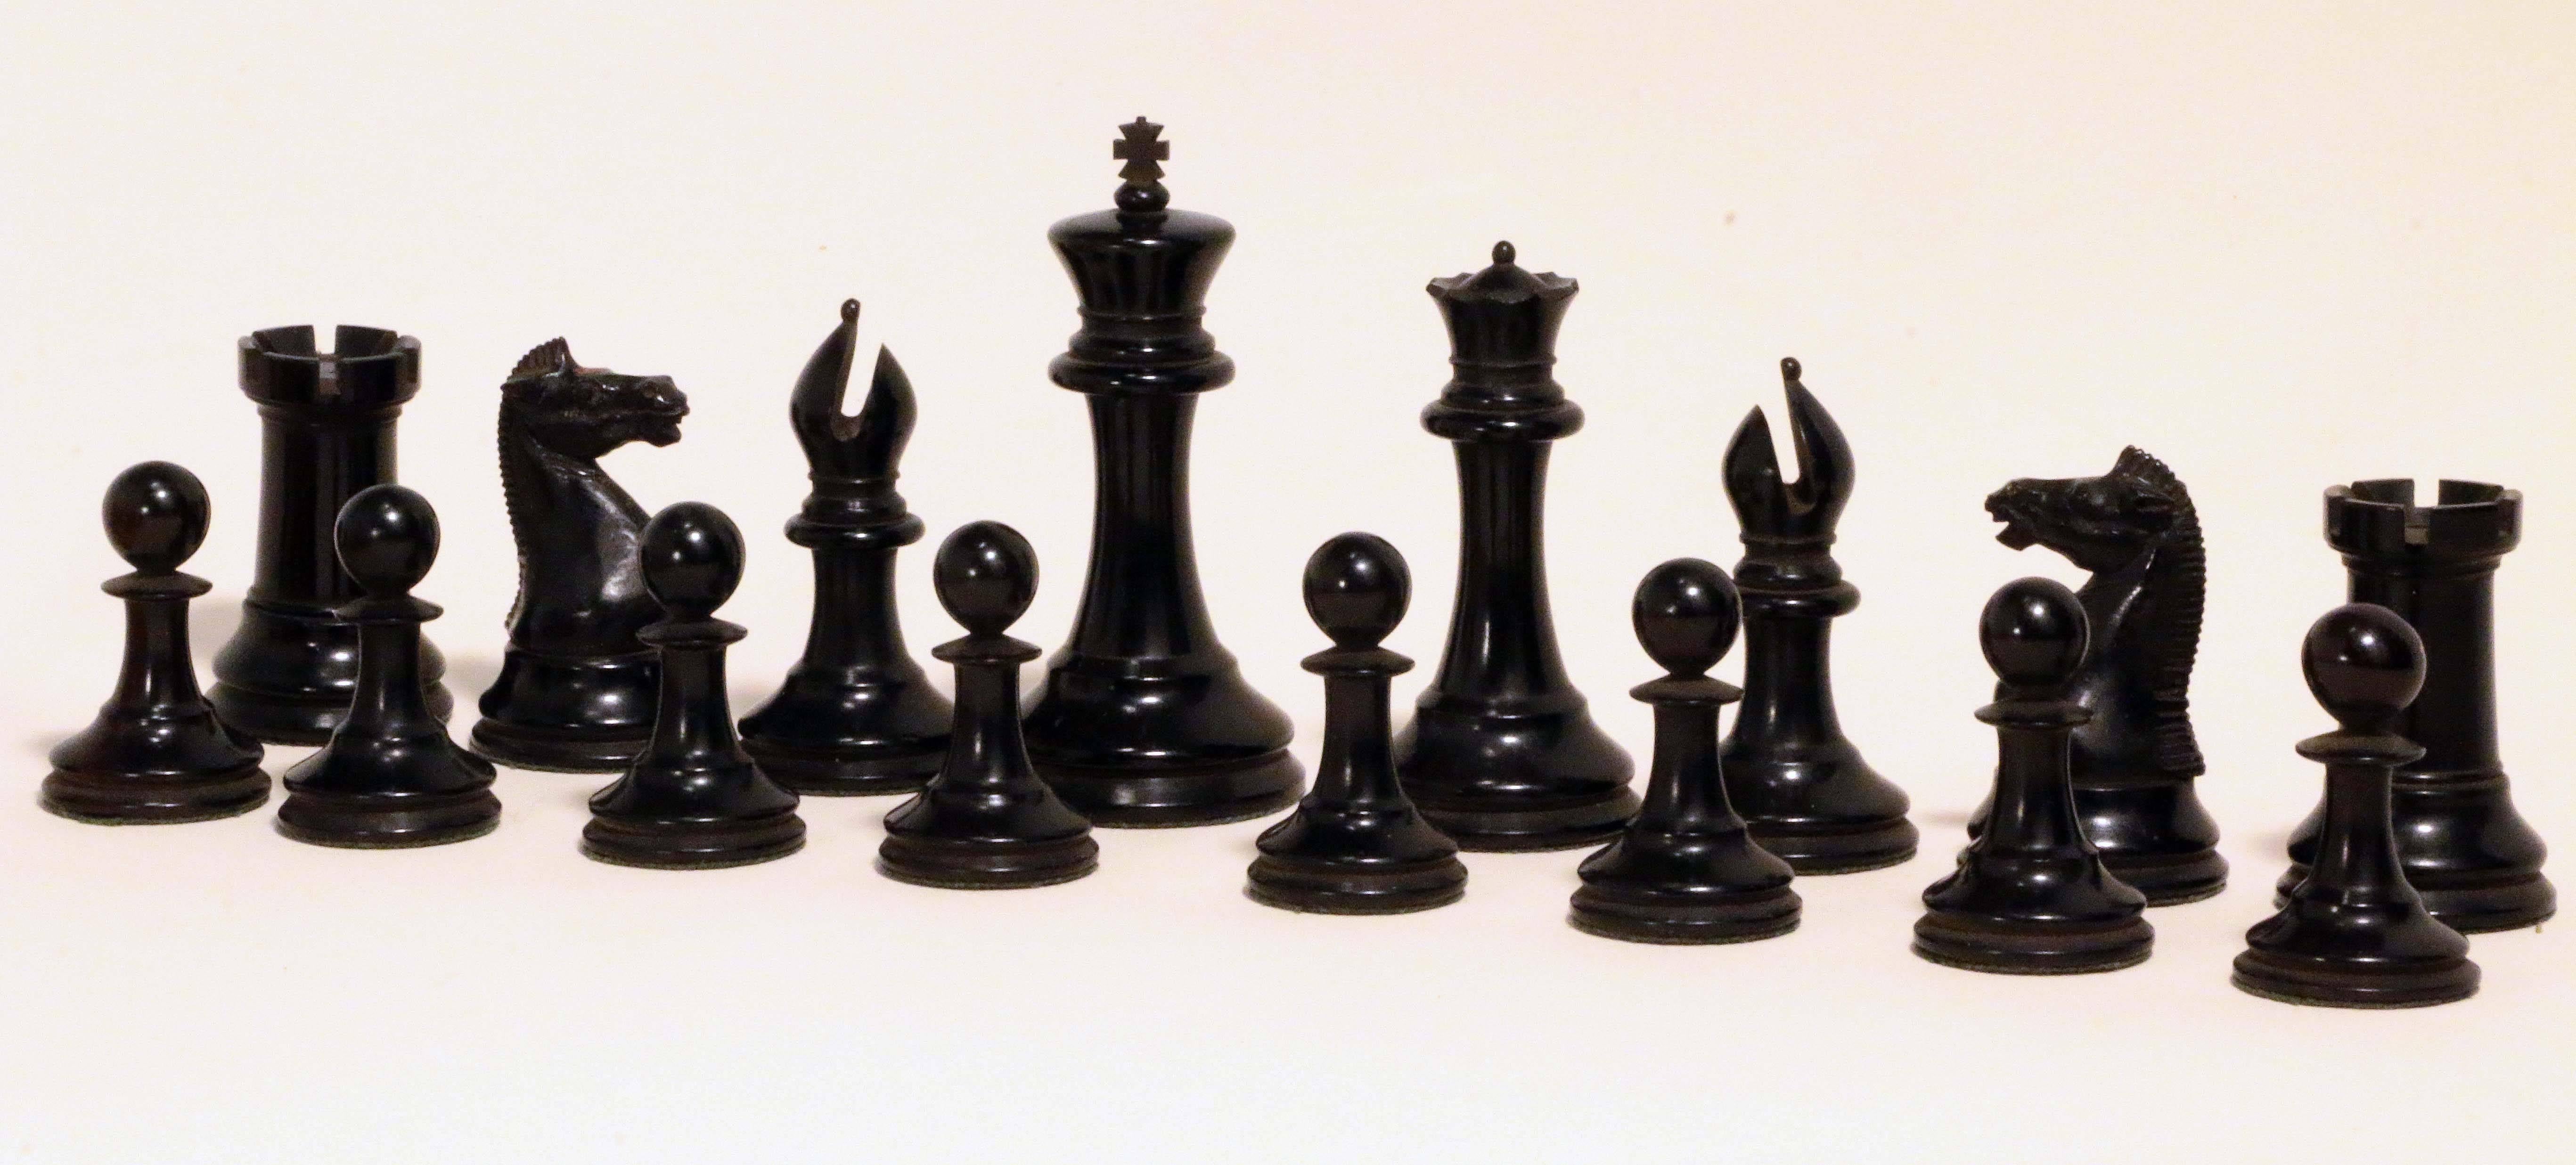 antique jaques chess sets for sale